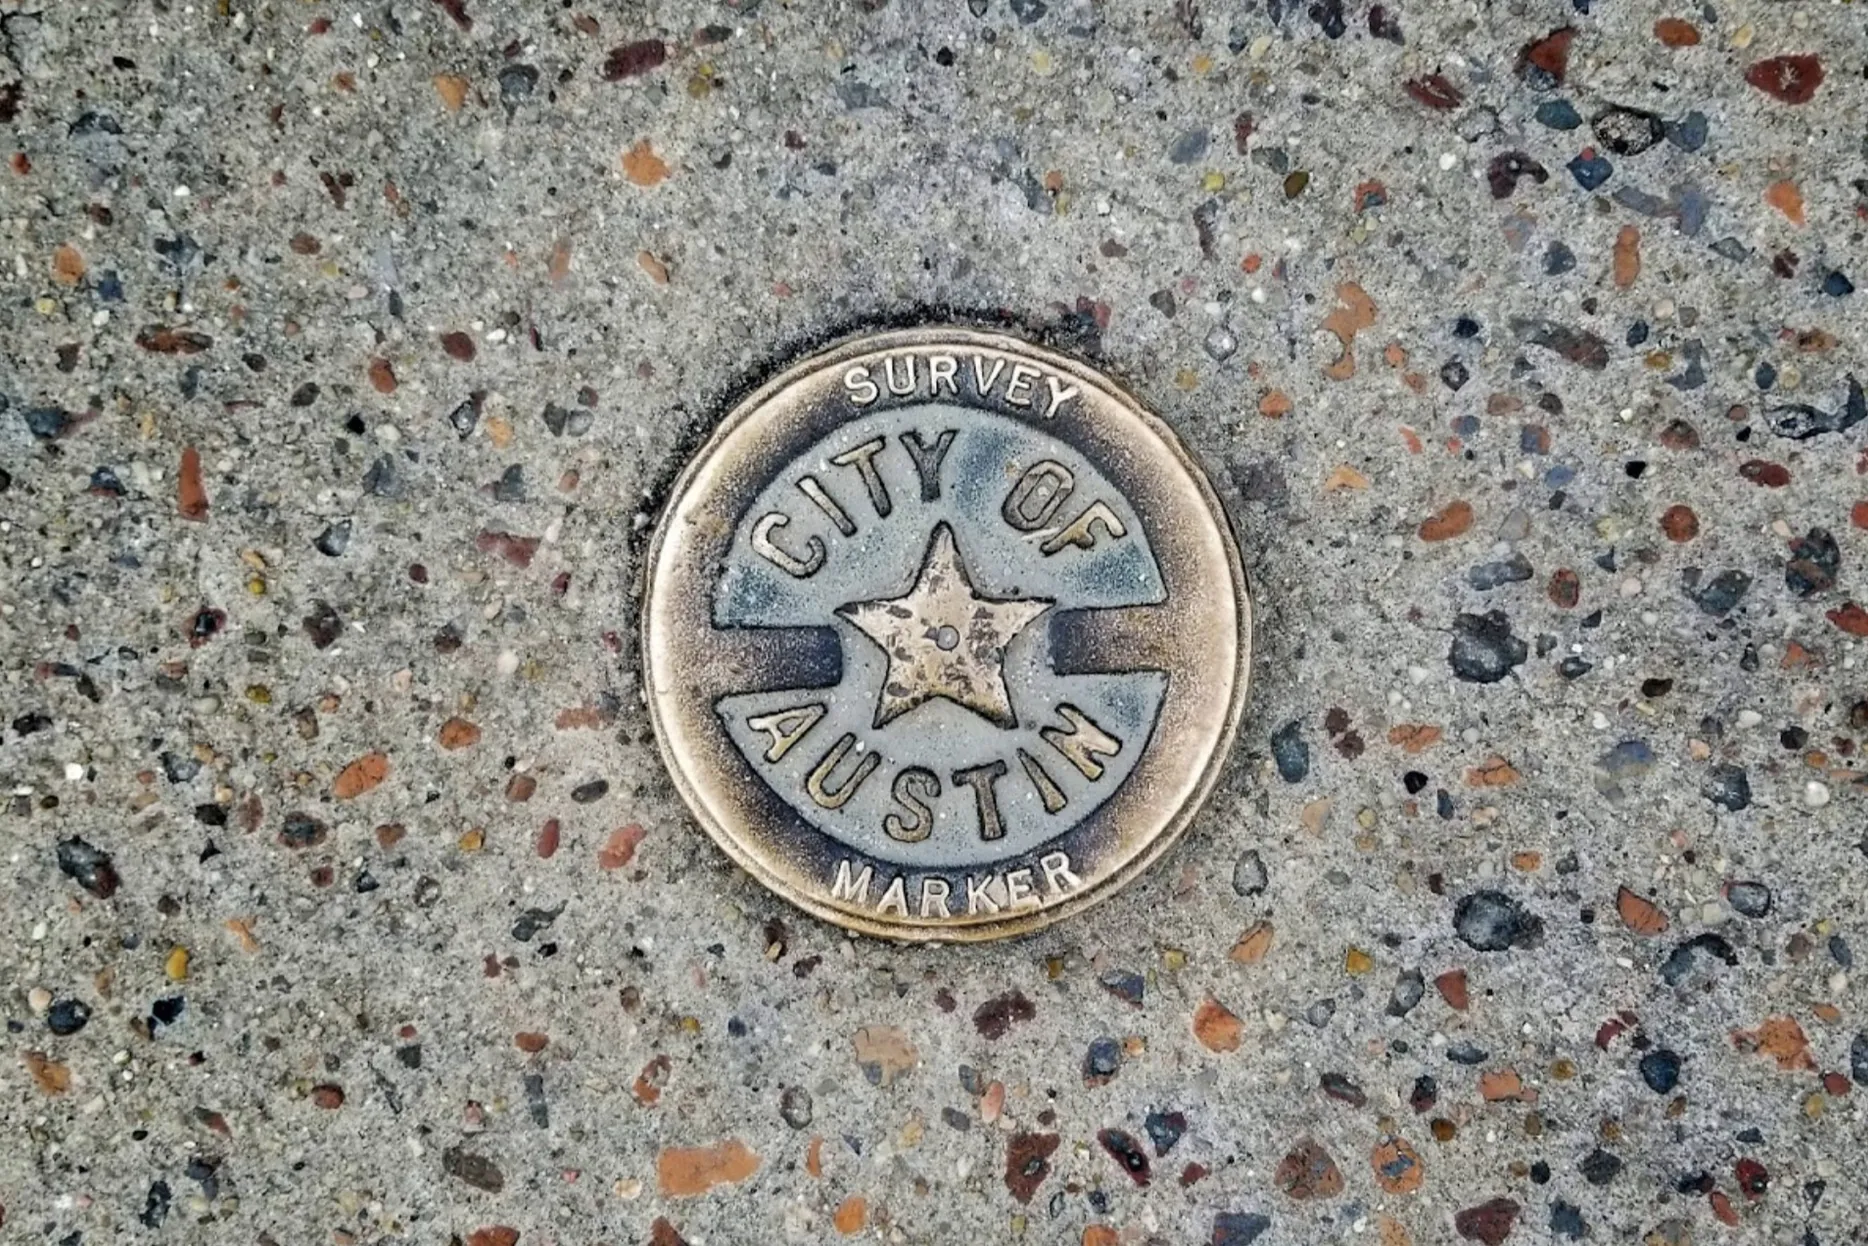 A brass star embedded in the sidewalk as a survey marker in Austin, Texas